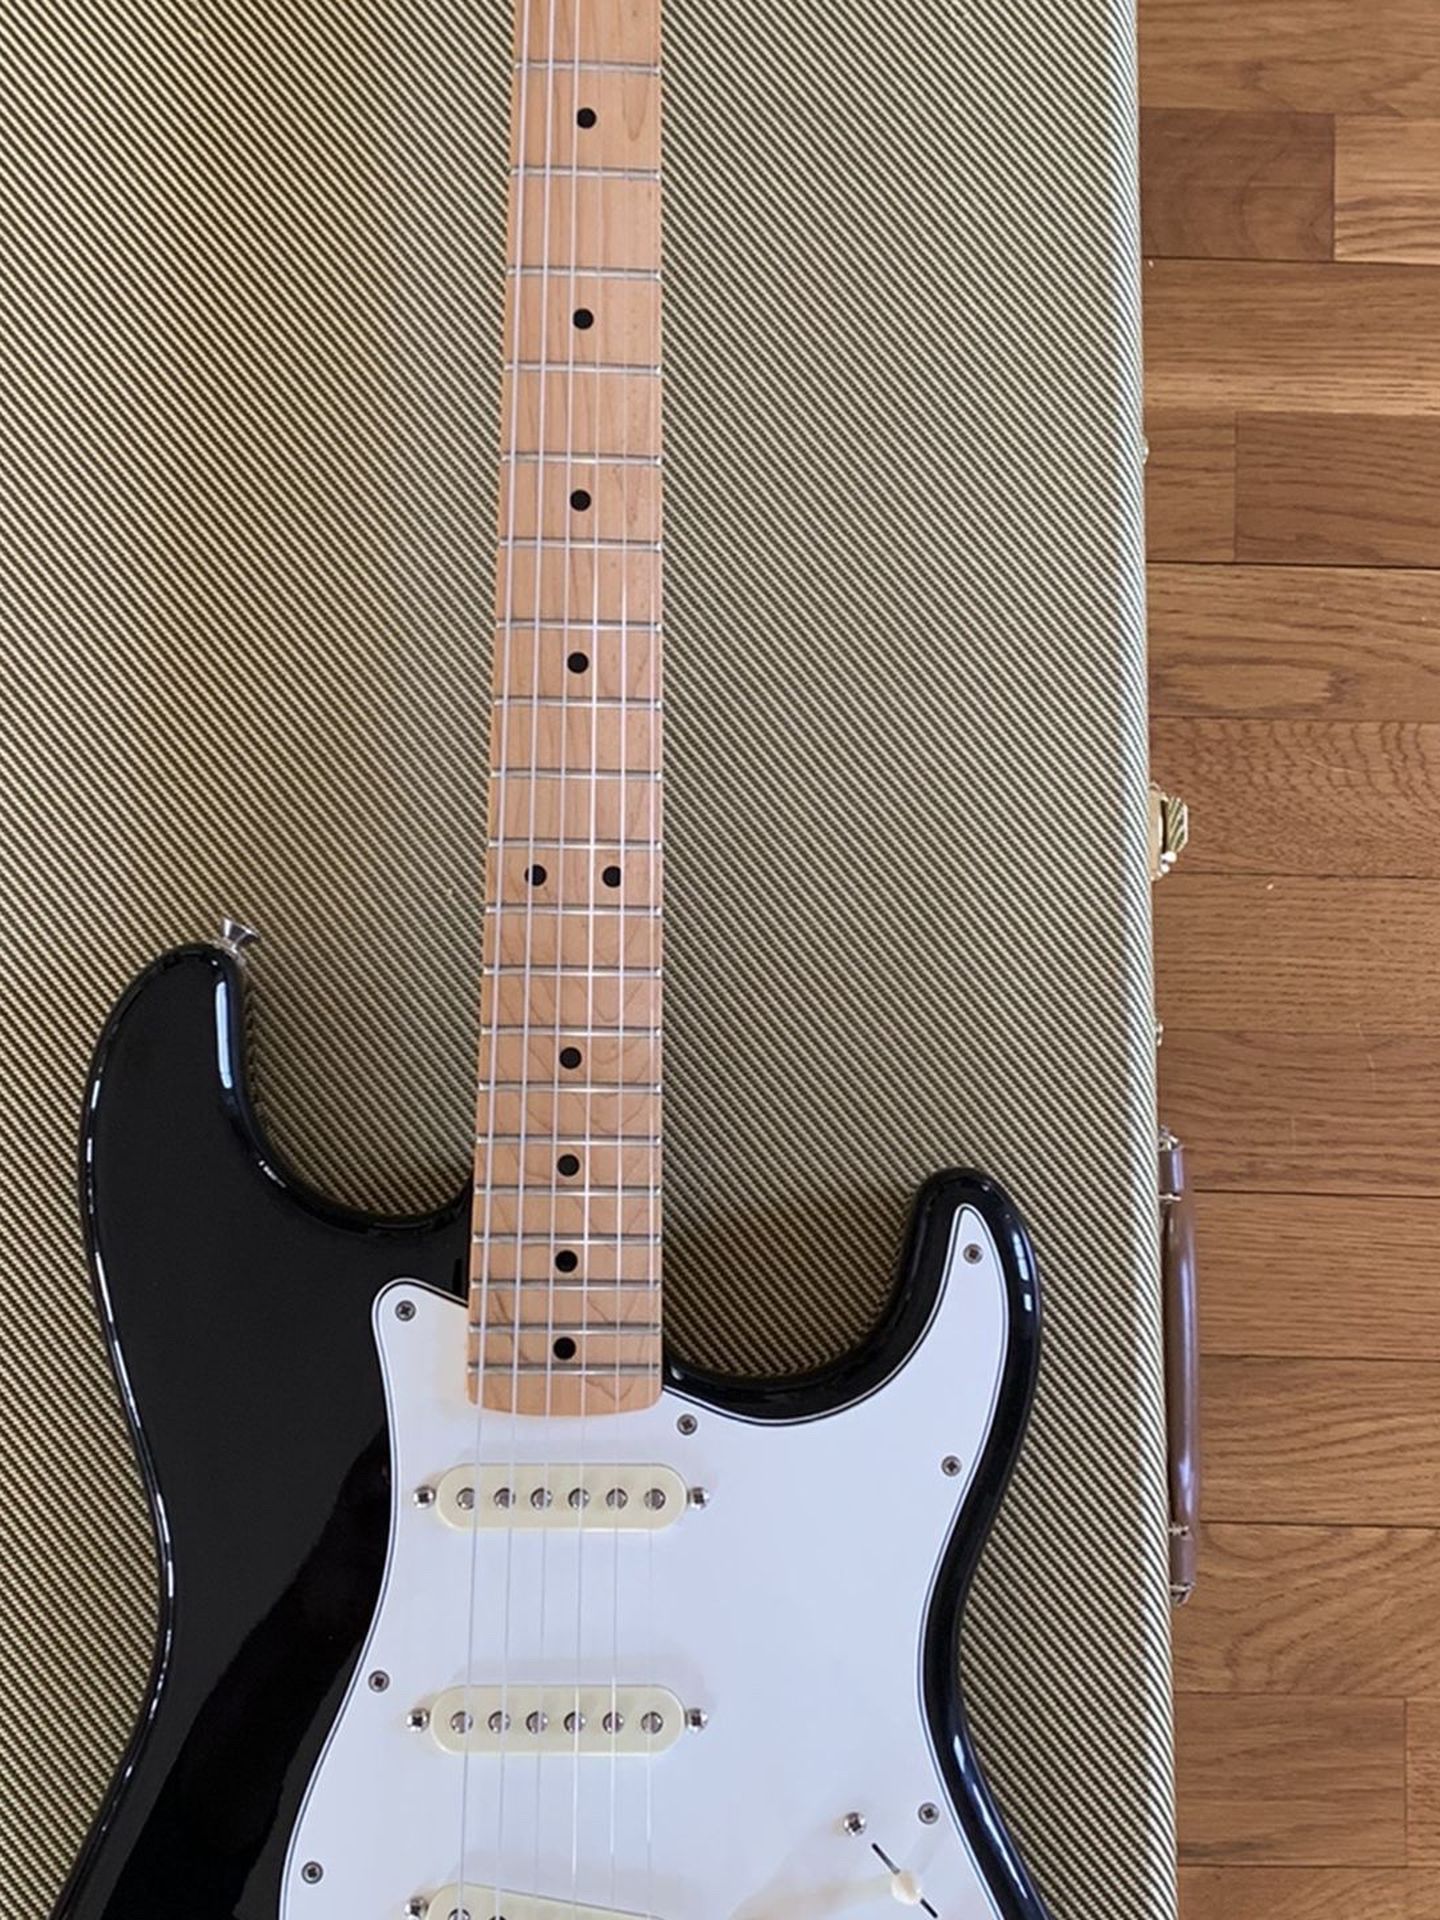 Fender Stratocaster Electric Guitar MINT